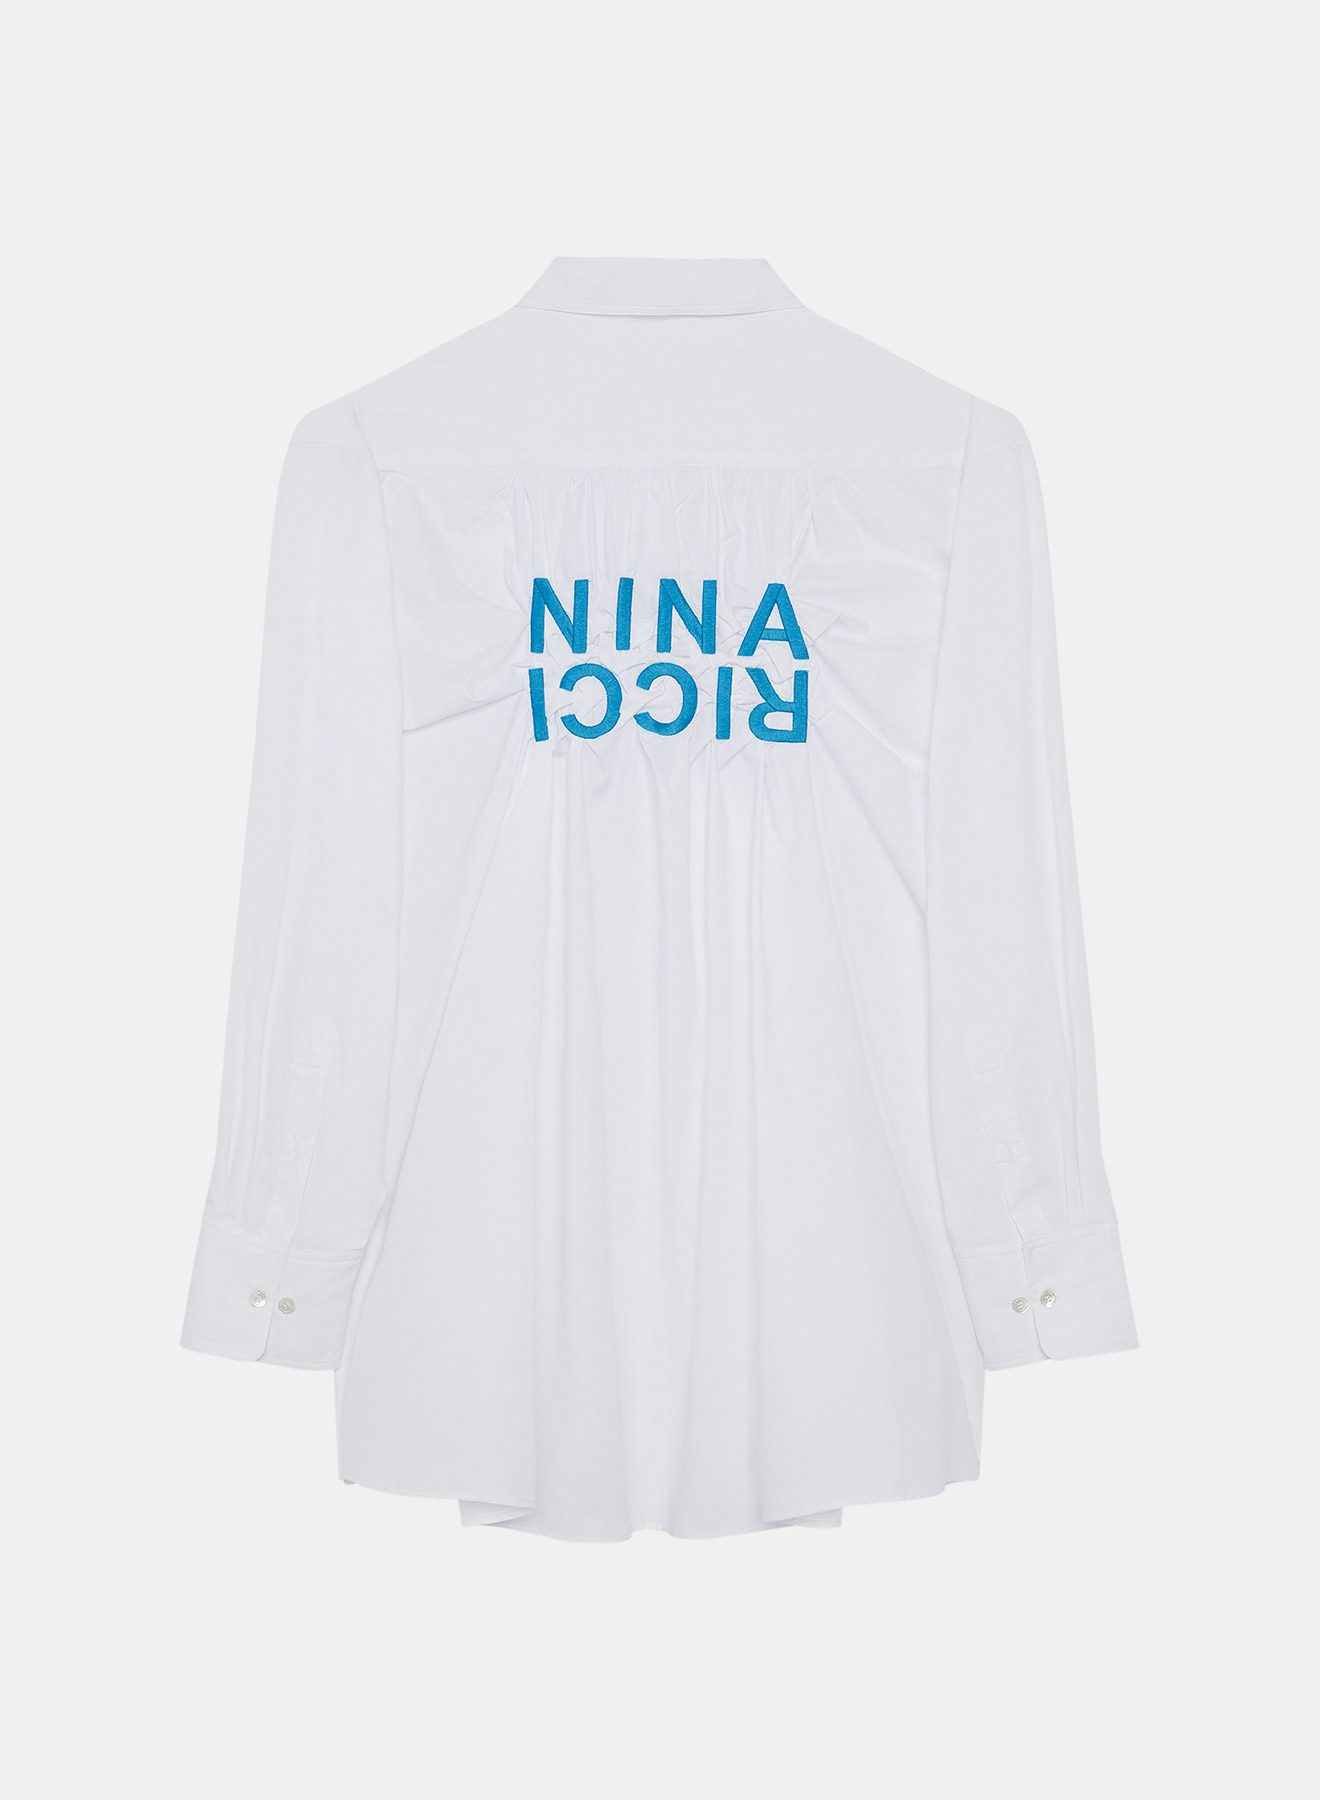 Chemise Crinkle avec Broderie Contrastée Nina Ricci dans le Dos Blanche et Bleu Cyan - Nina Ricci